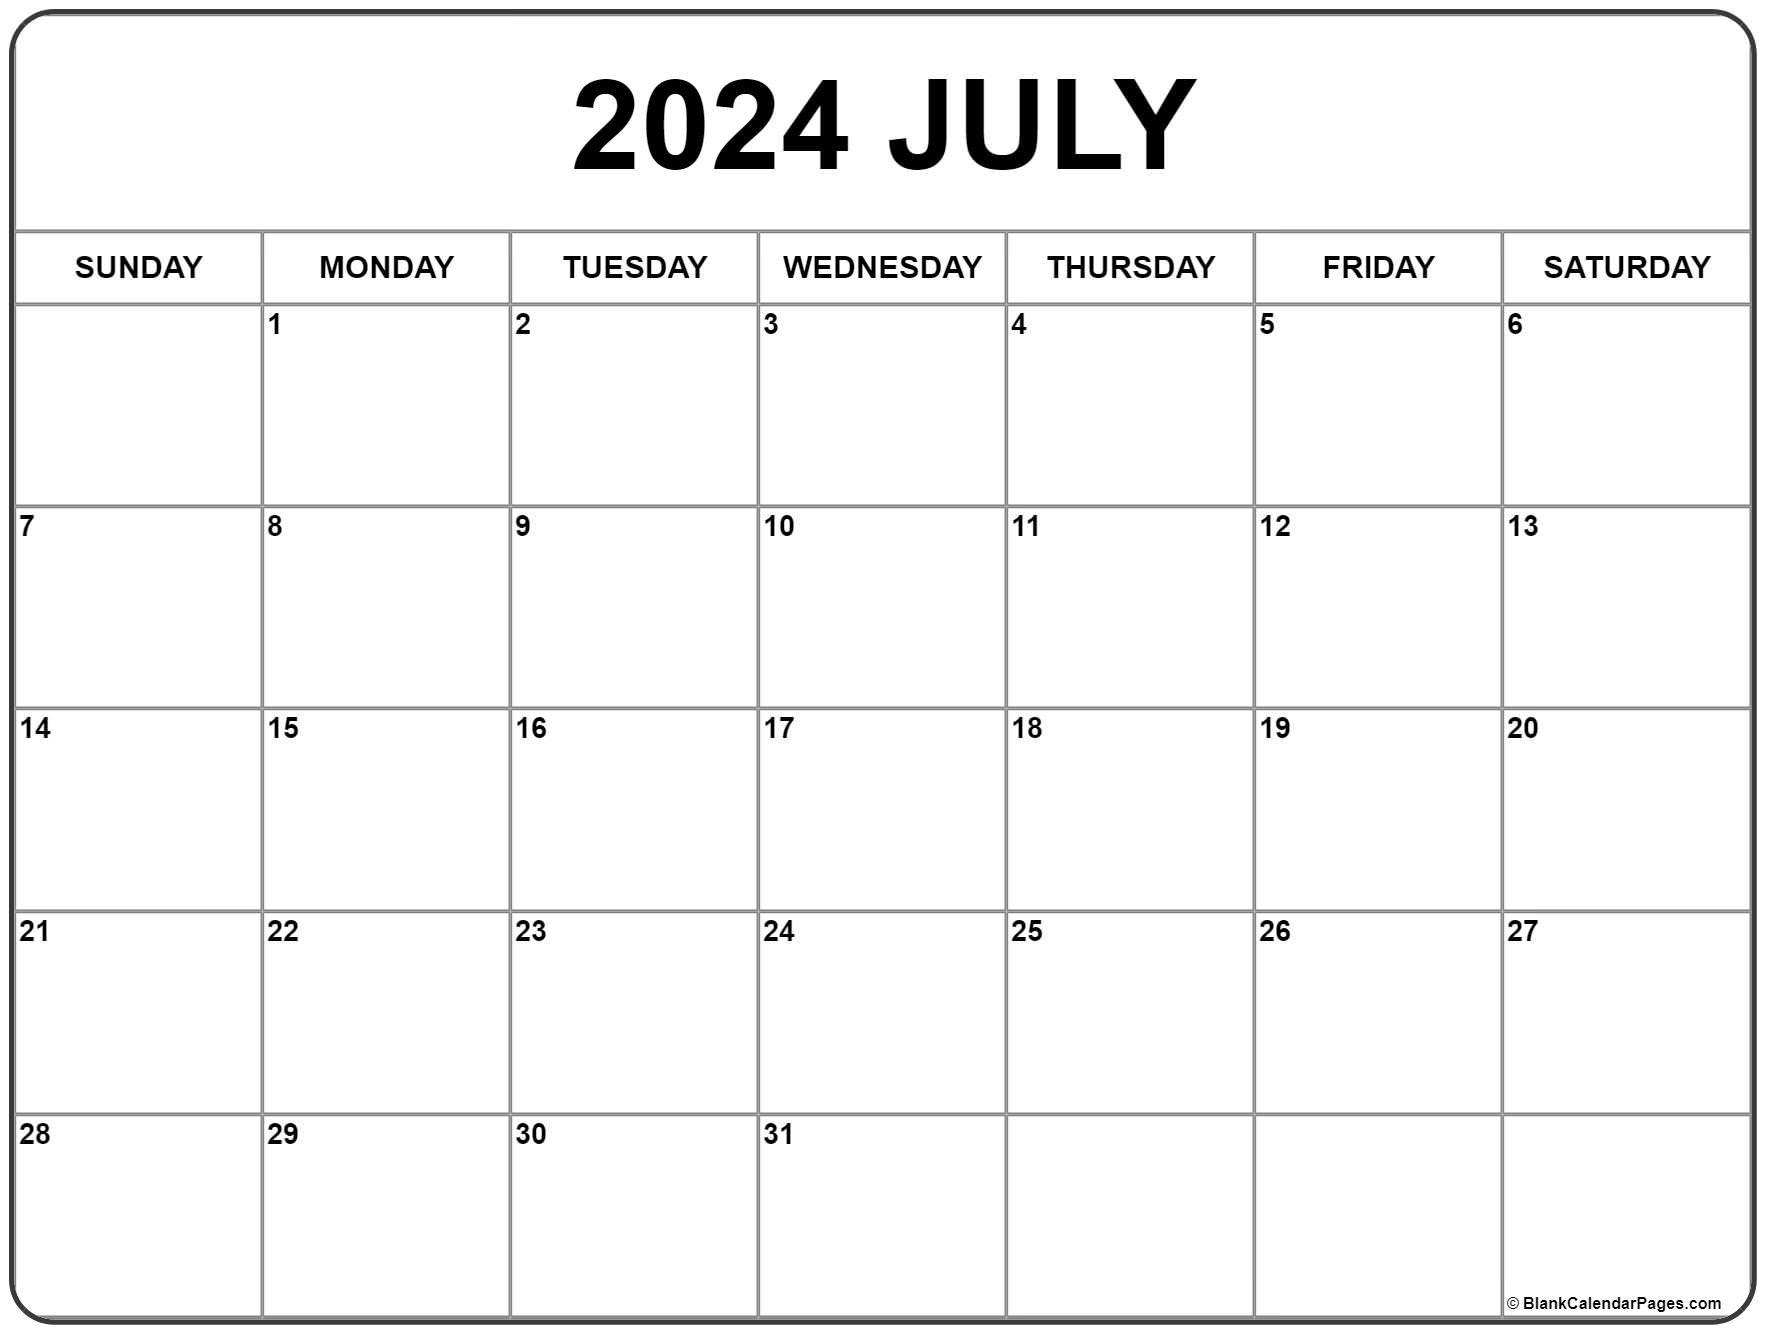 July 2024 Calendar | Free Printable Calendar intended for Free July Calendar Template 2024